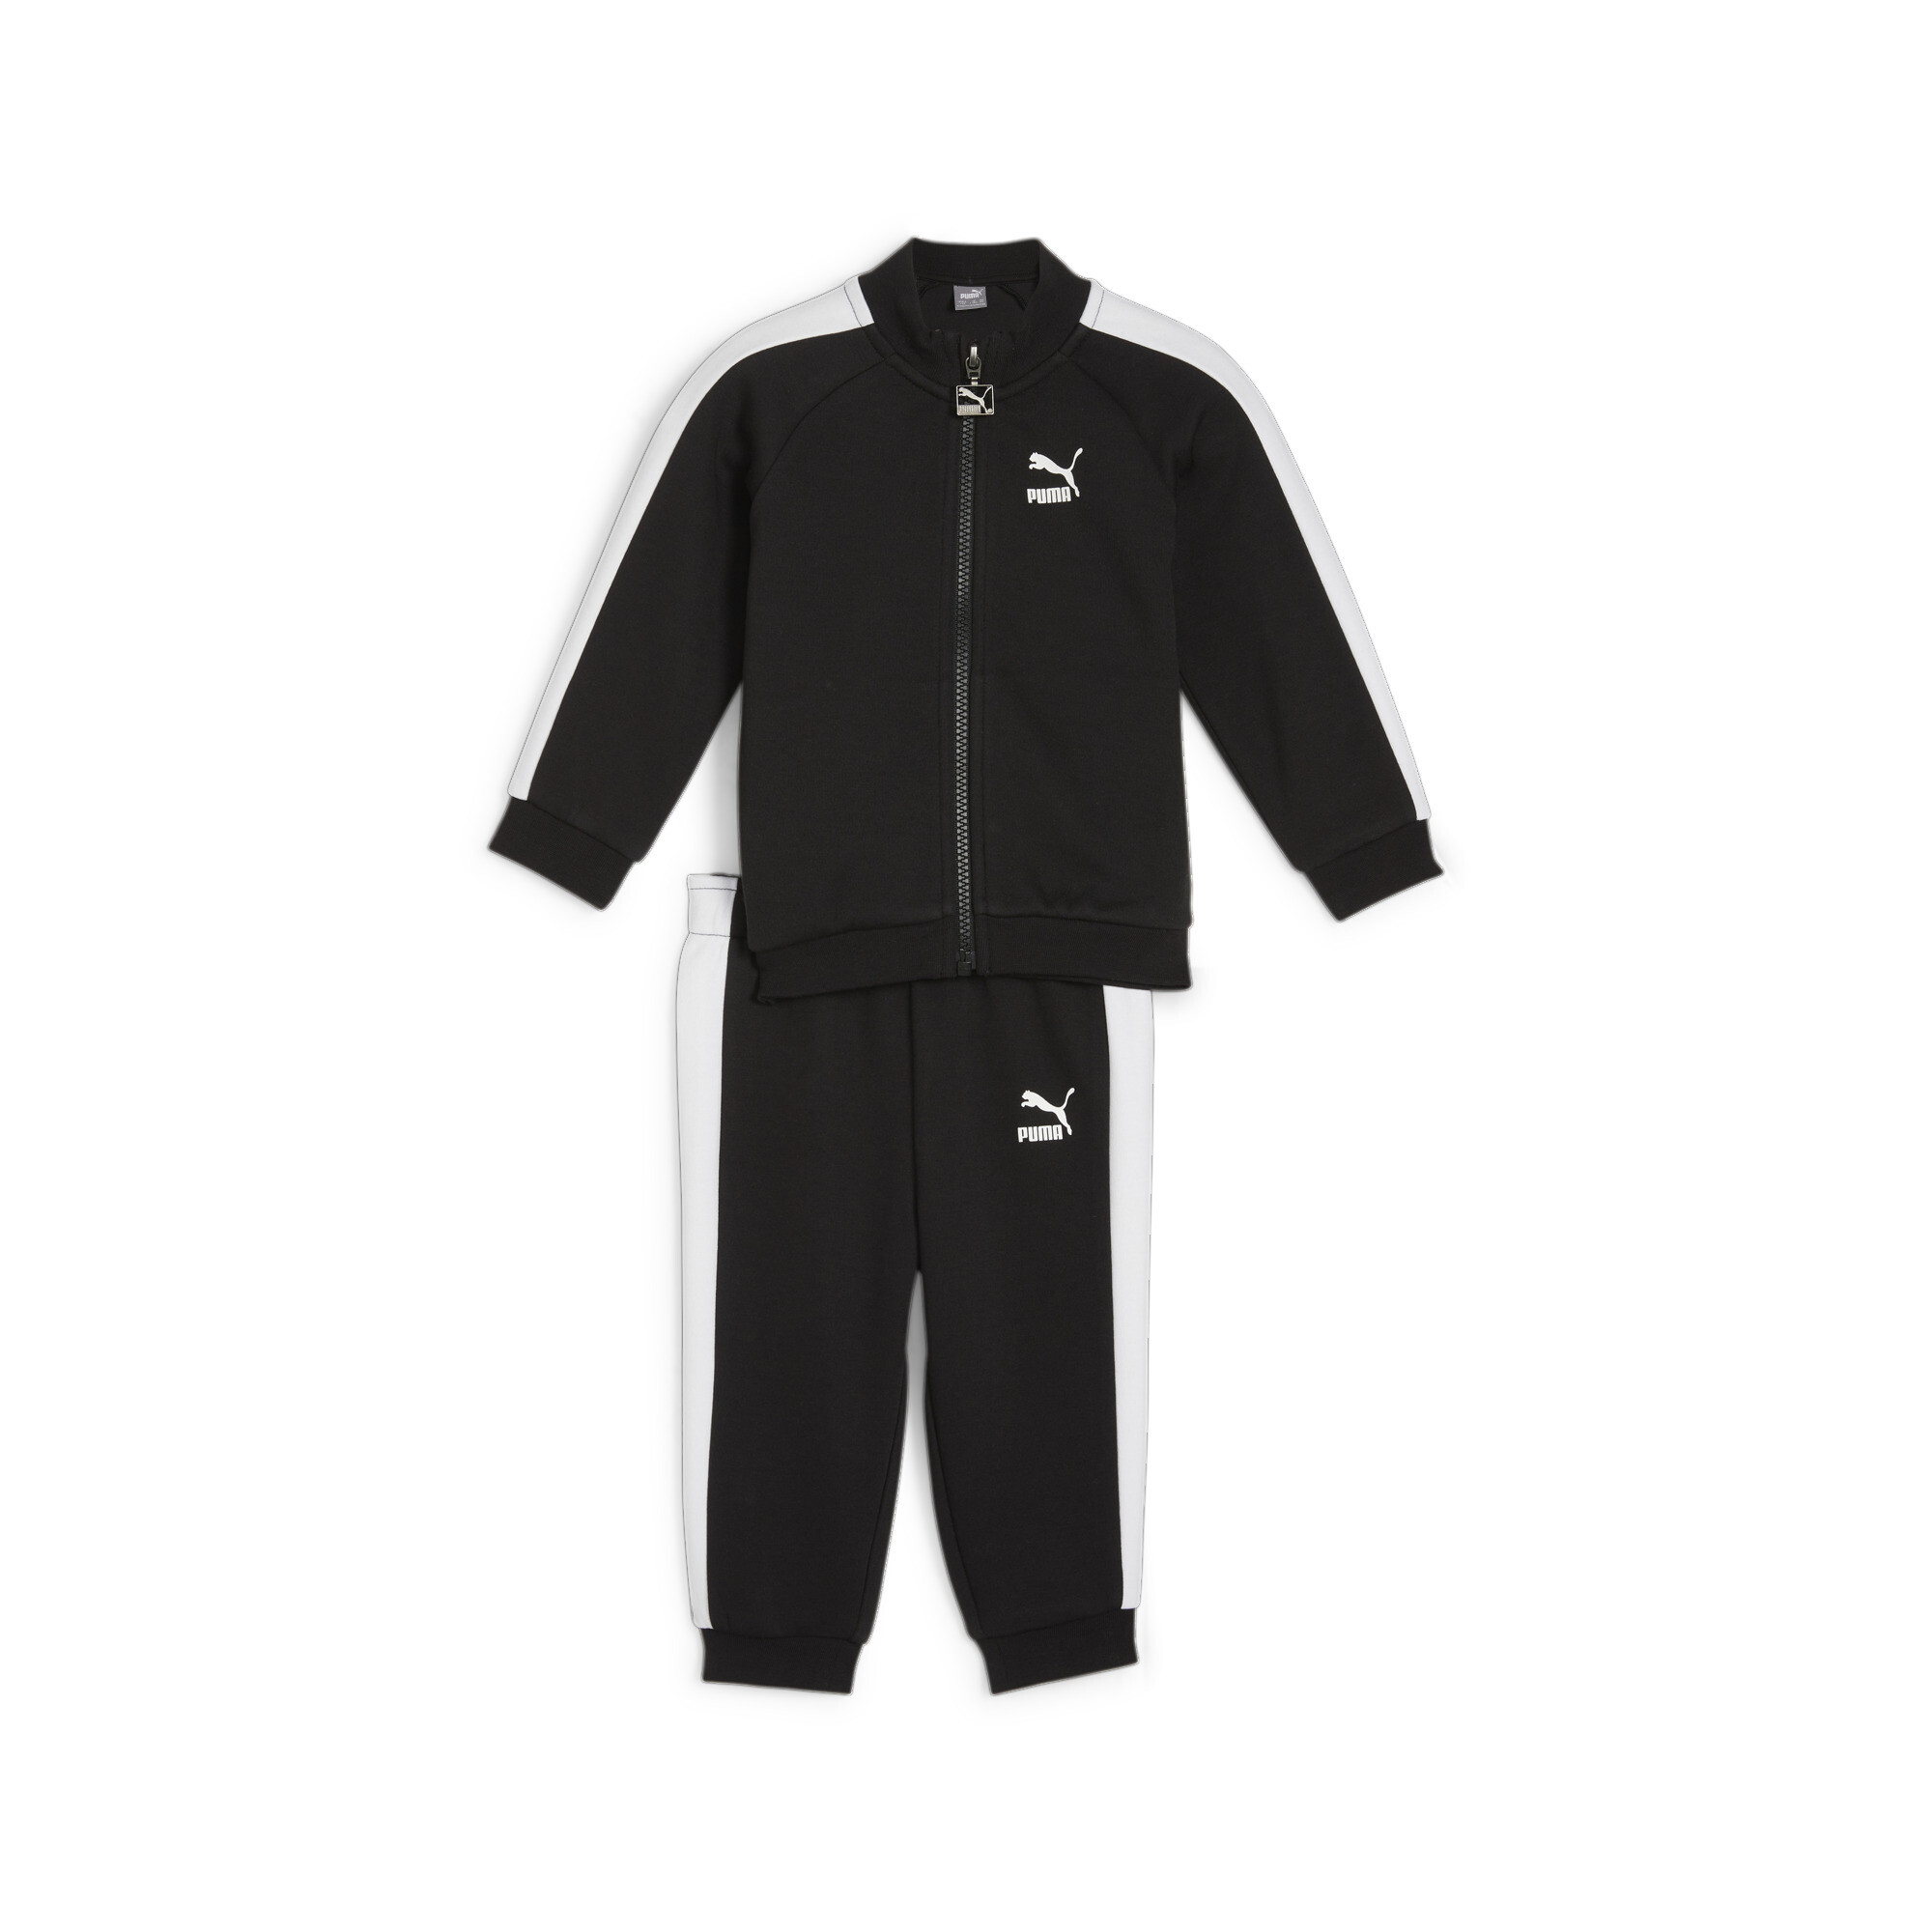 Puma MINICATS T7 ICONIC Baby Tracksuit Set, Black, Size 1-2Y, Clothing